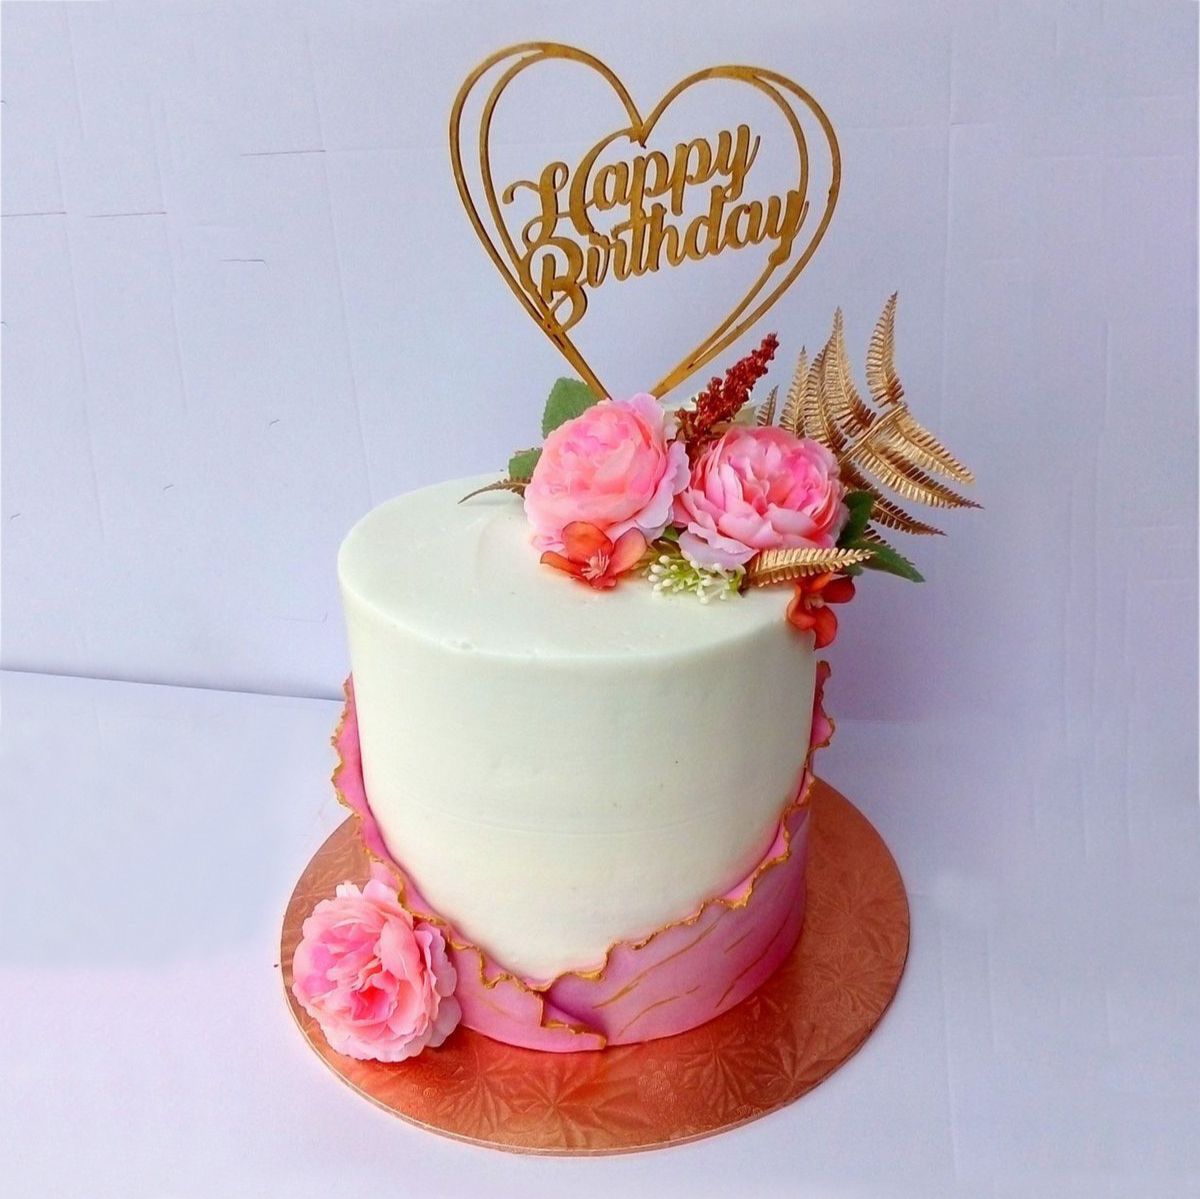 Happy Birthday Fondant Cake - Dough and Cream